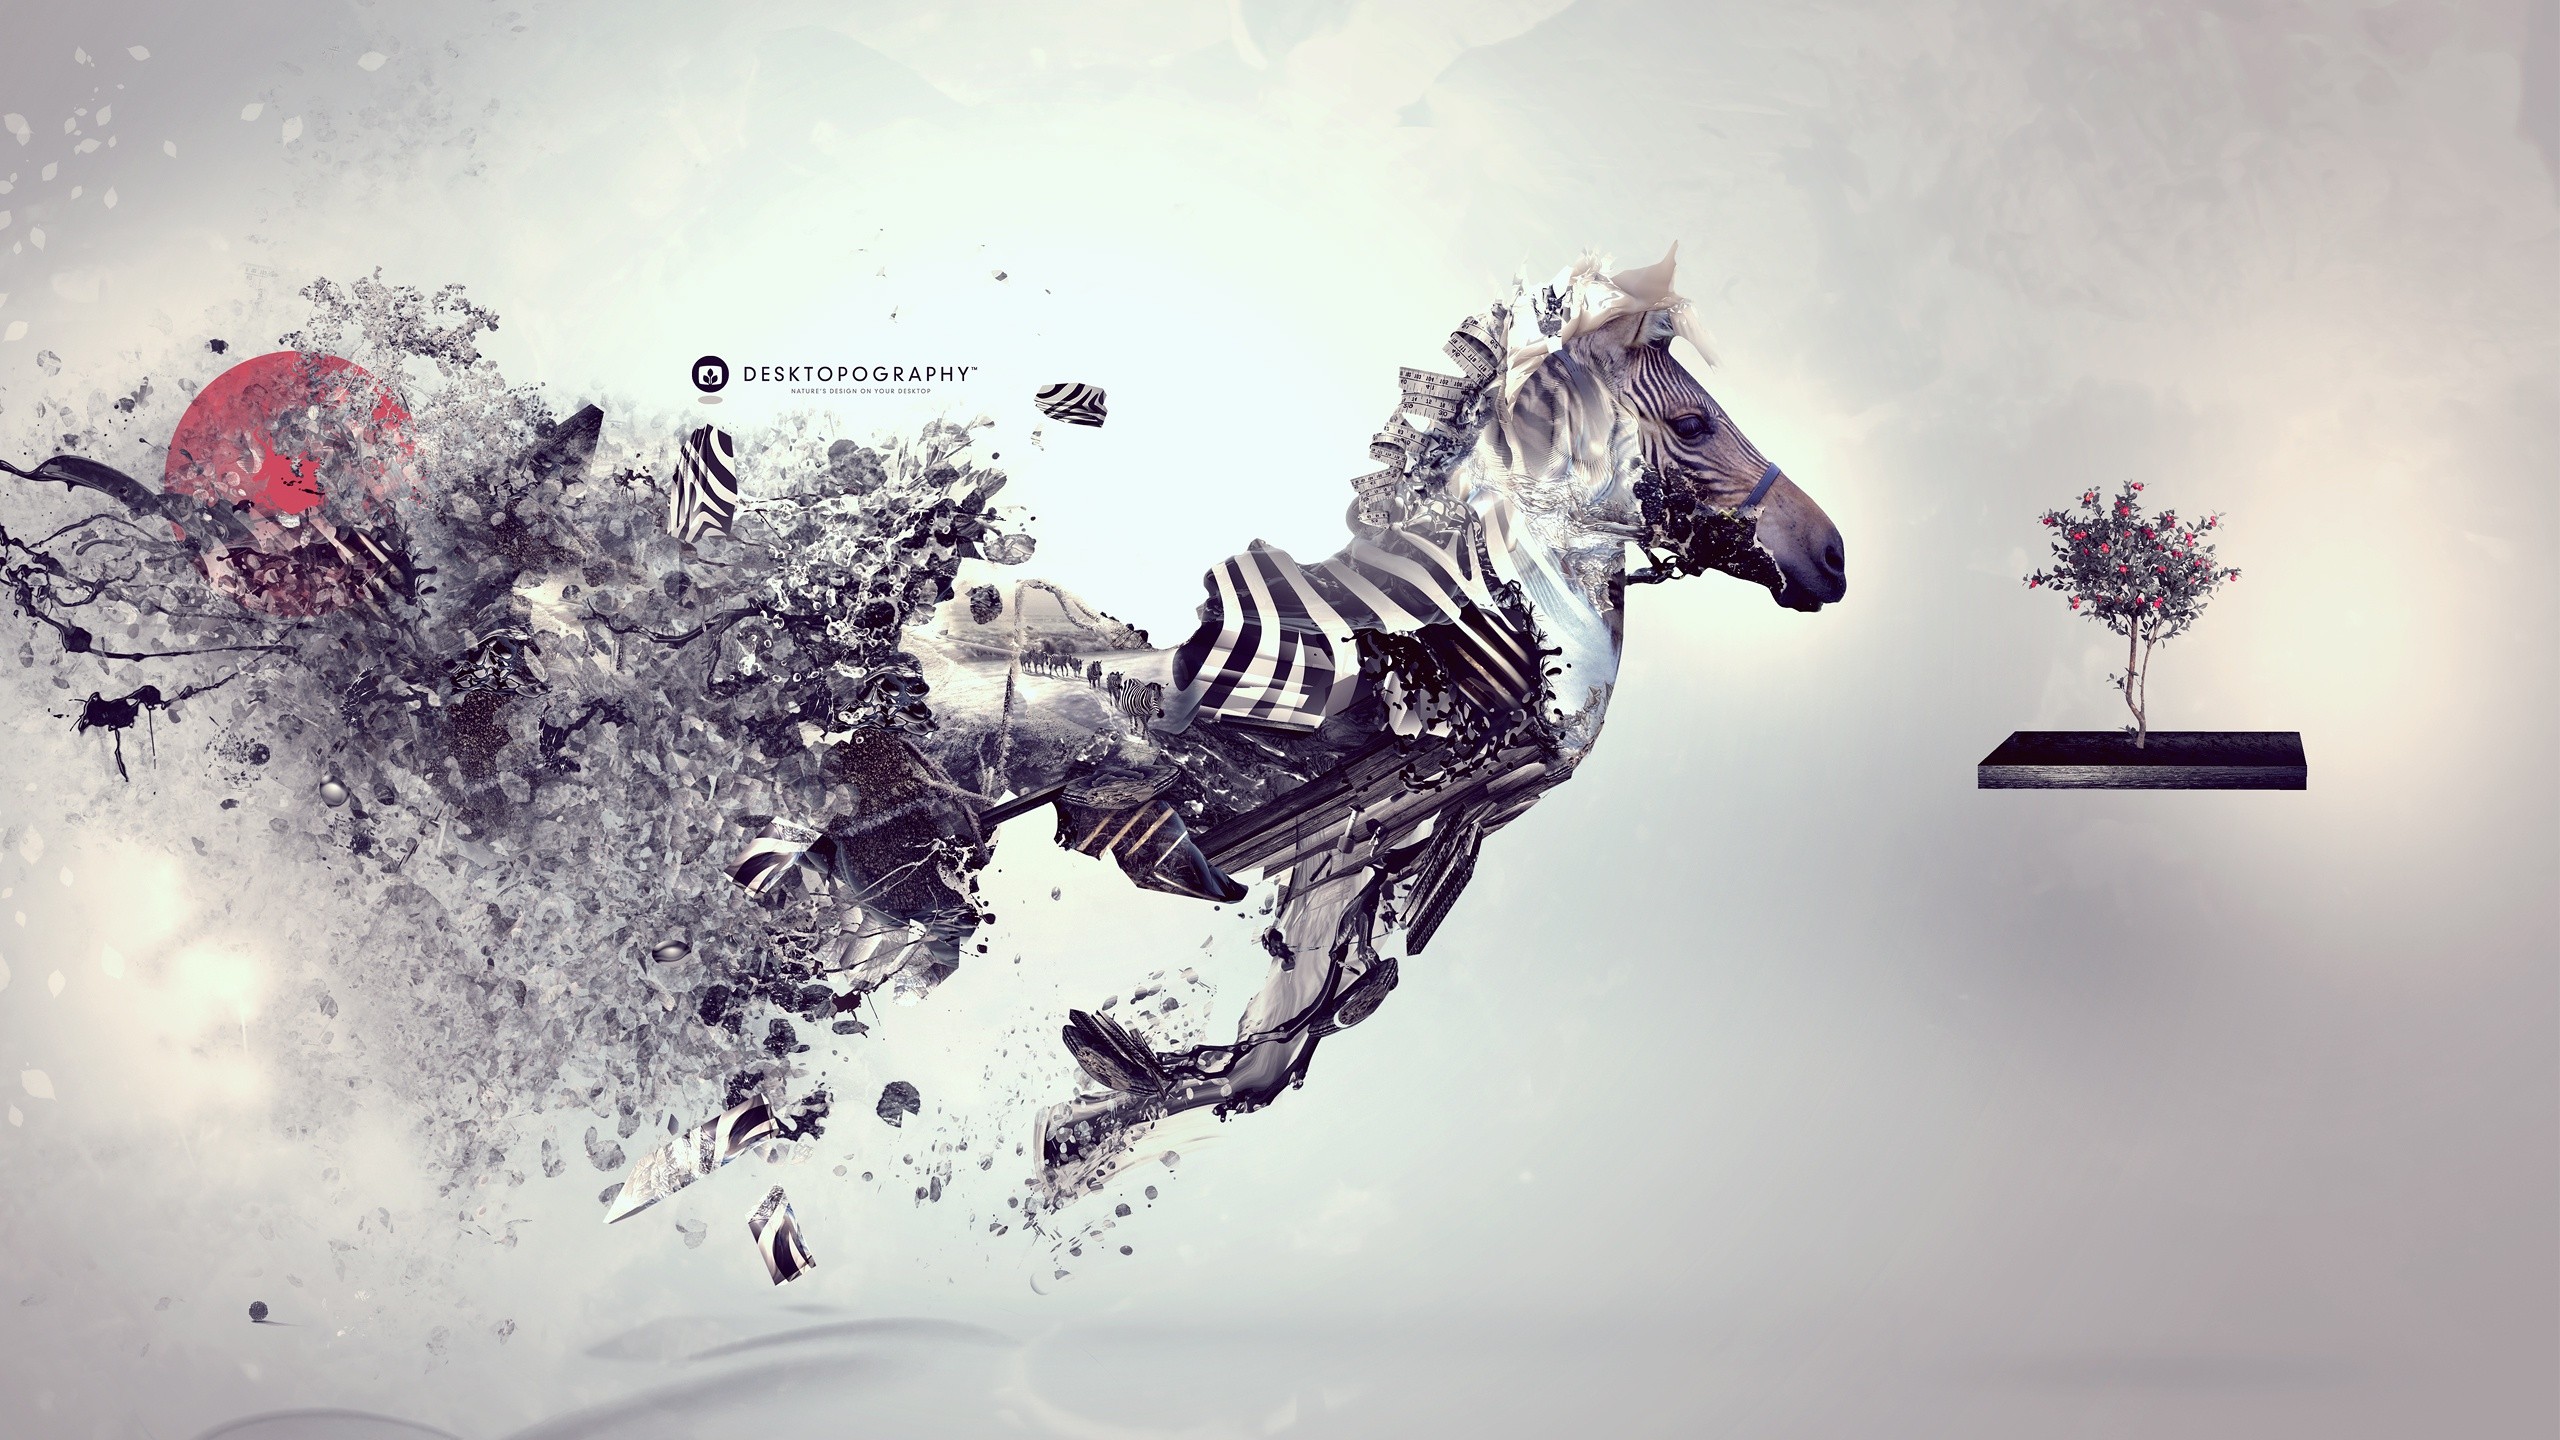 General 2560x1440 zebras animals Desktopography digital art artwork abstract surreal mammals simple background